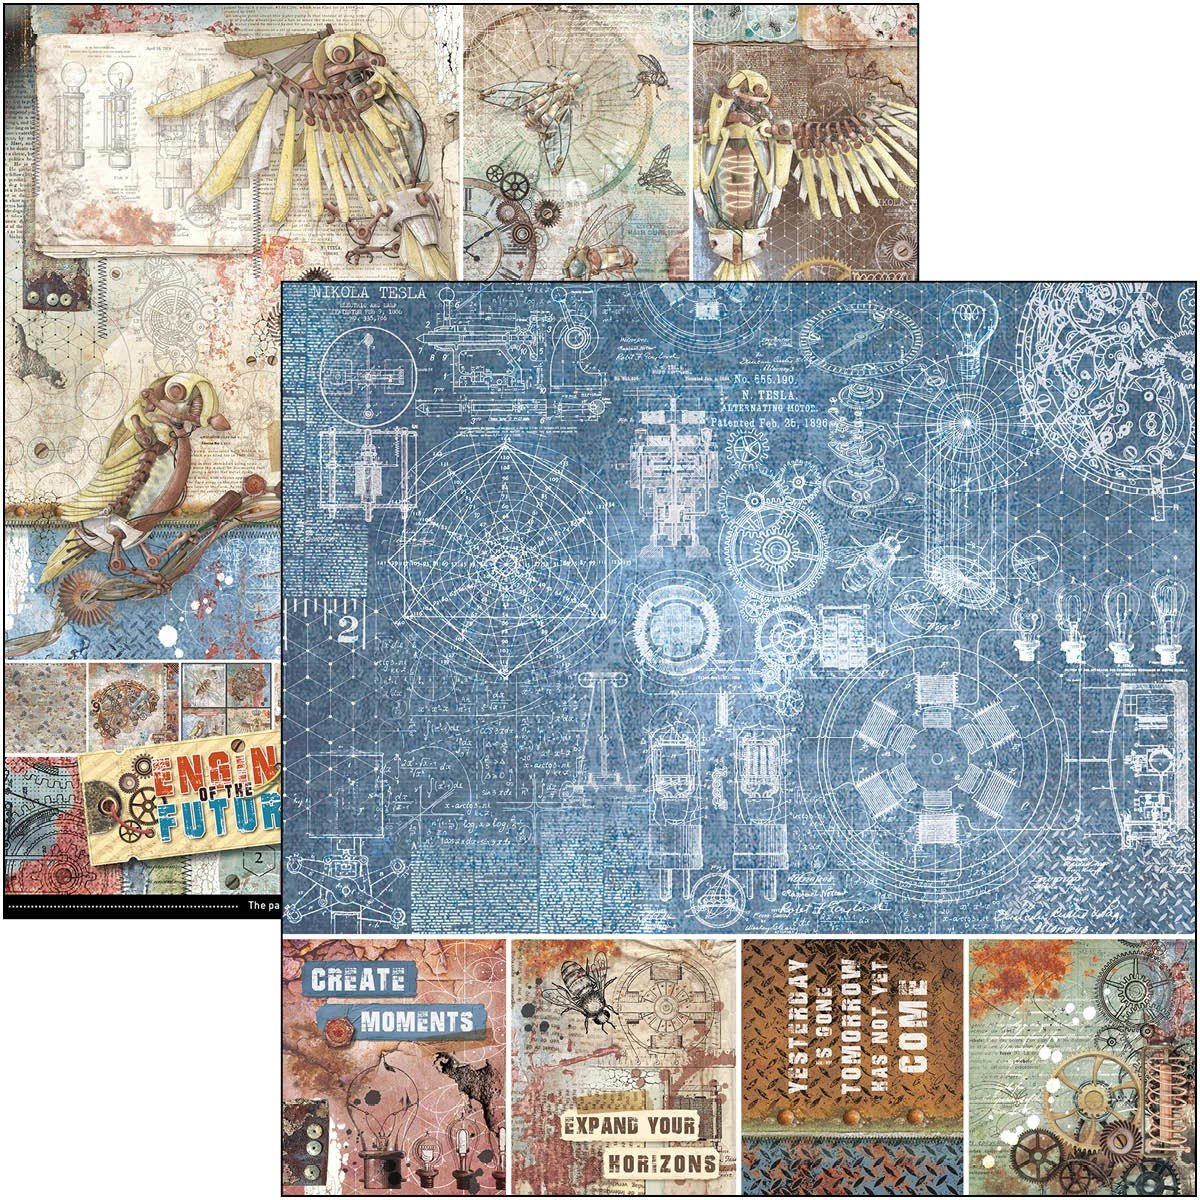 Scrapbooking Paper 12 x 12 sheet - Mechanical Fantasy cards